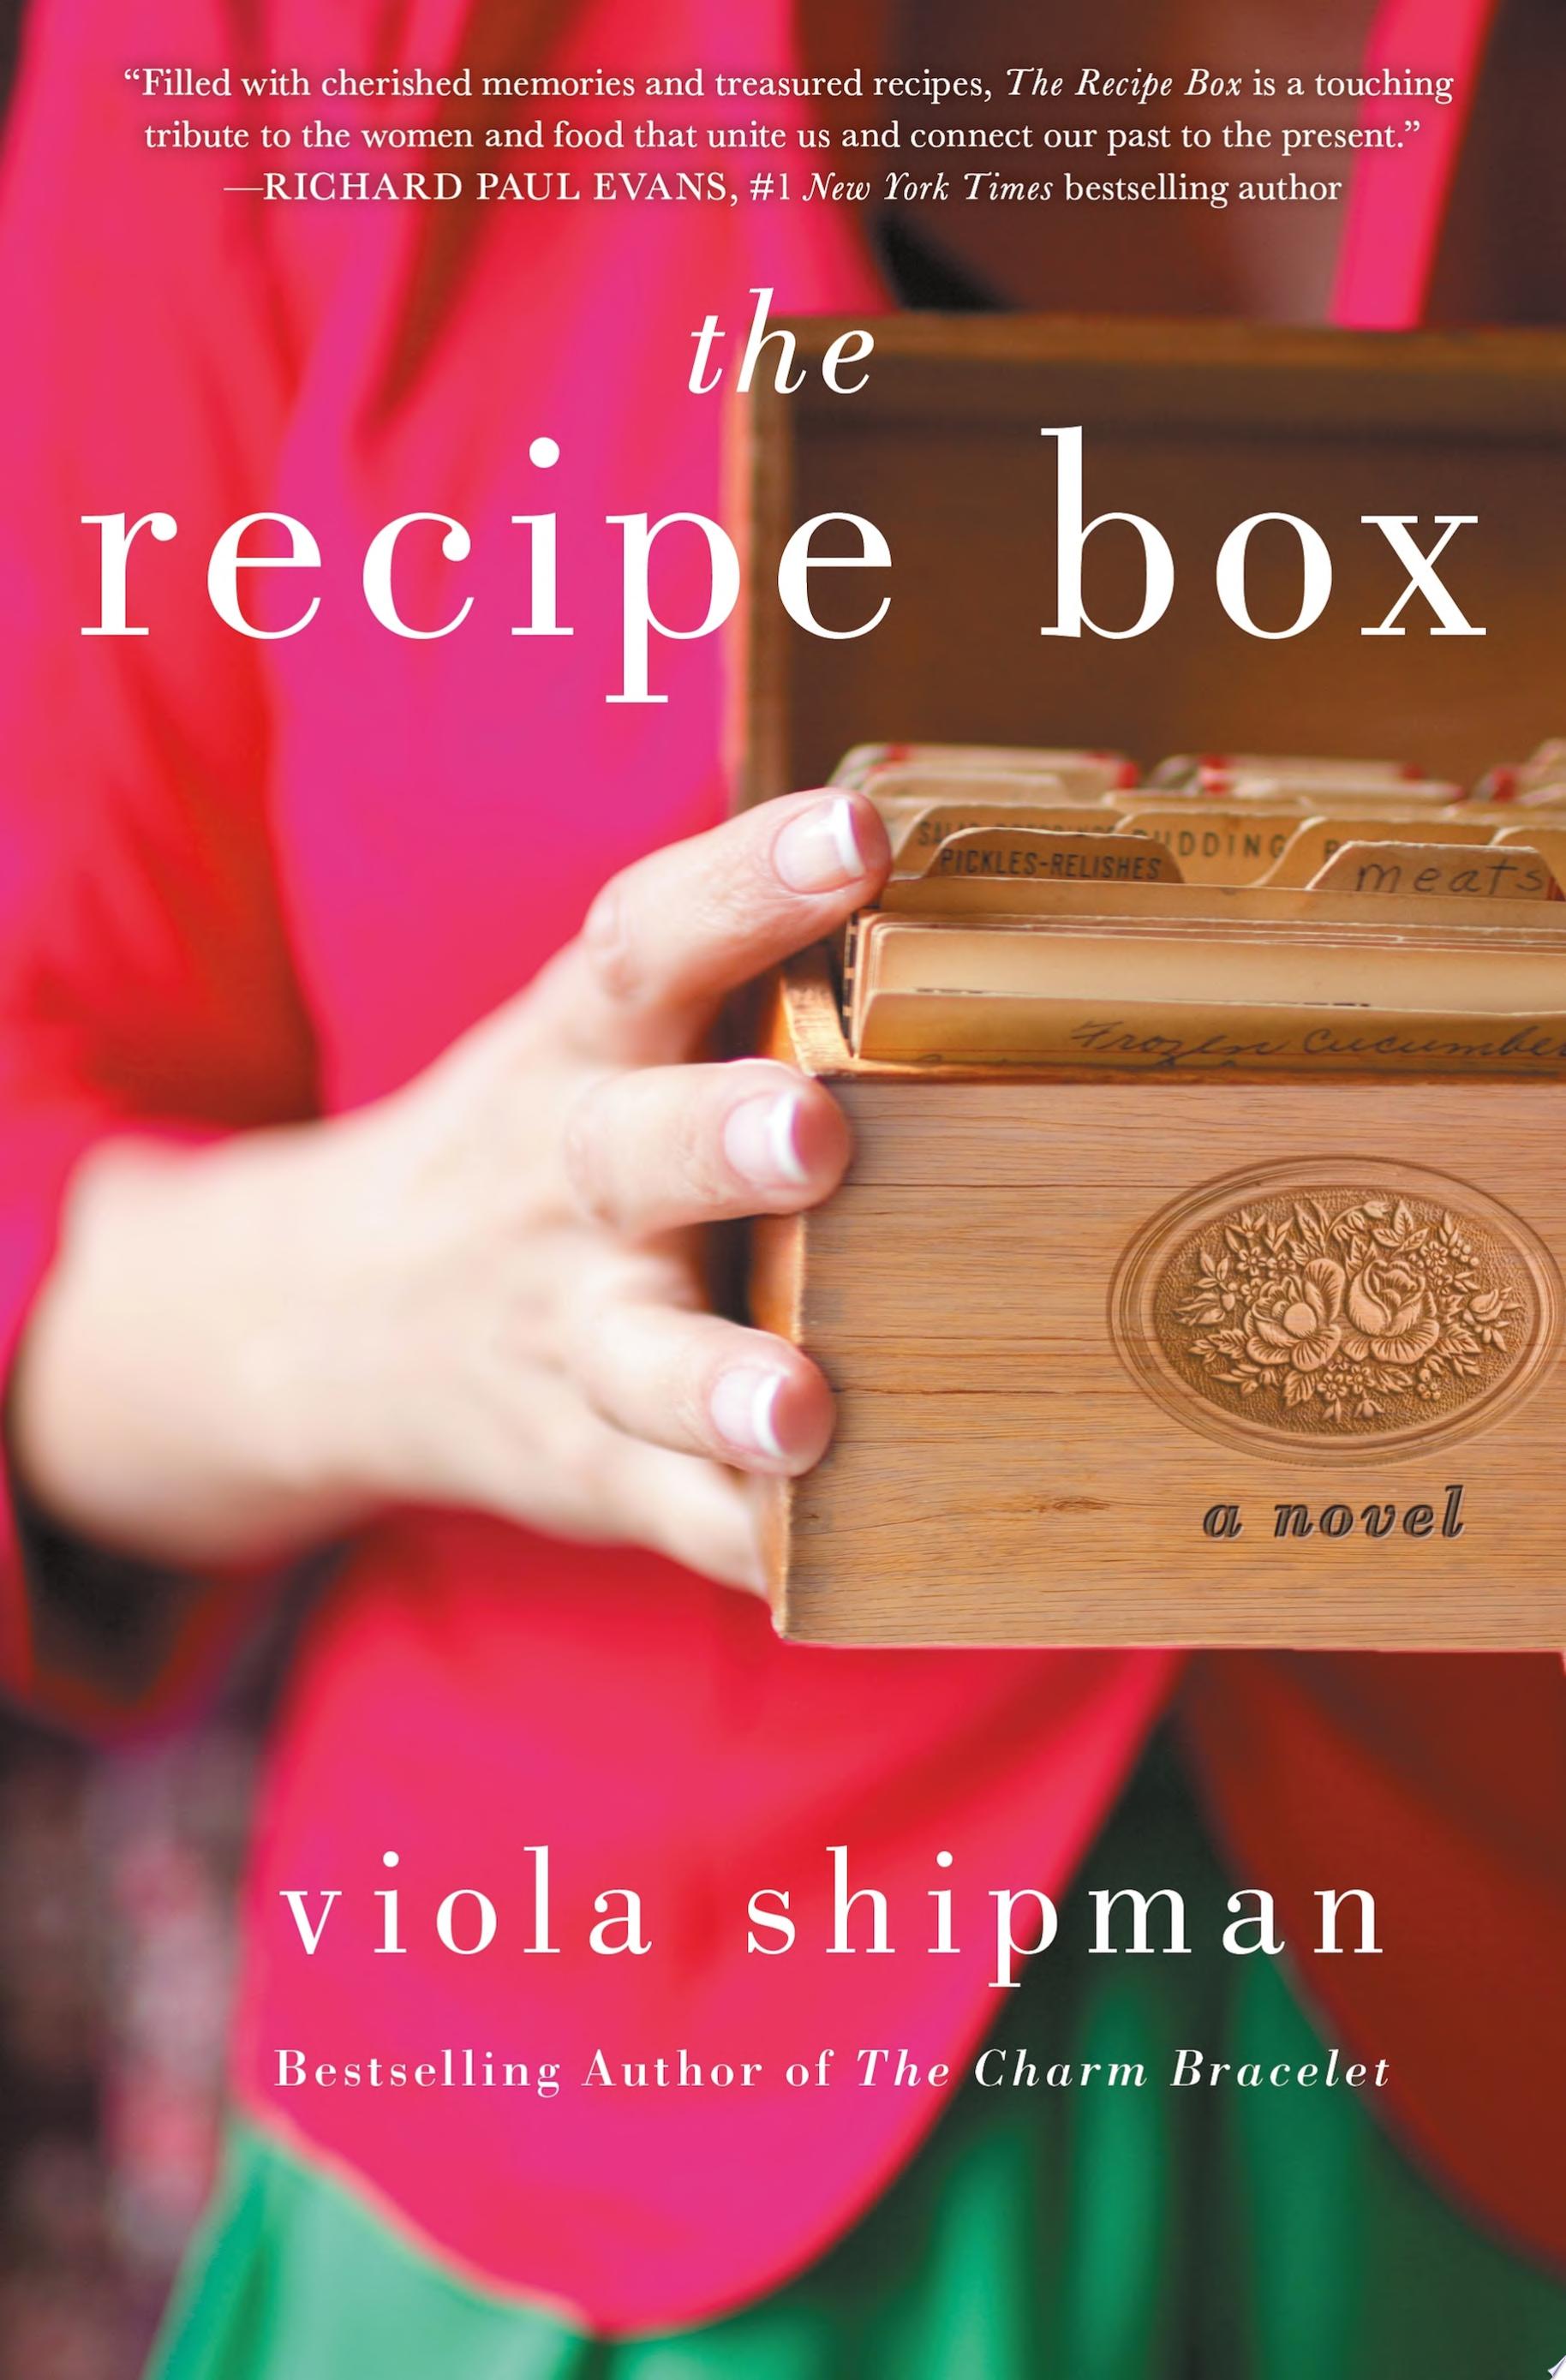 Image for "The Recipe Box"